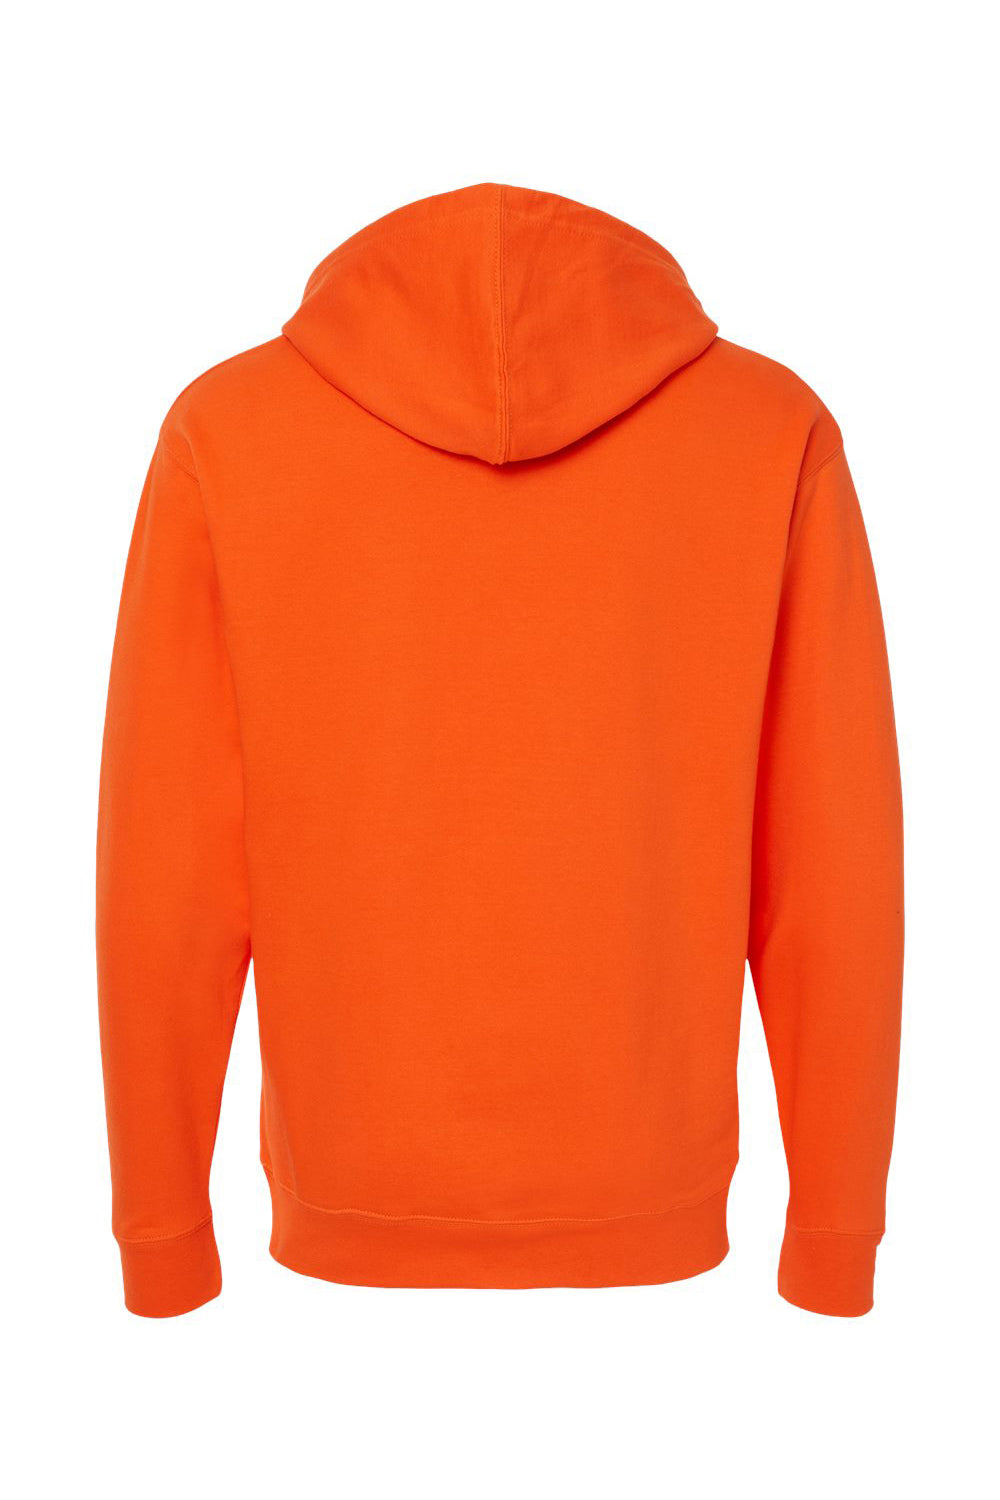 Independent Trading Co. SS4500 Mens Hooded Sweatshirt Hoodie Orange Flat Back